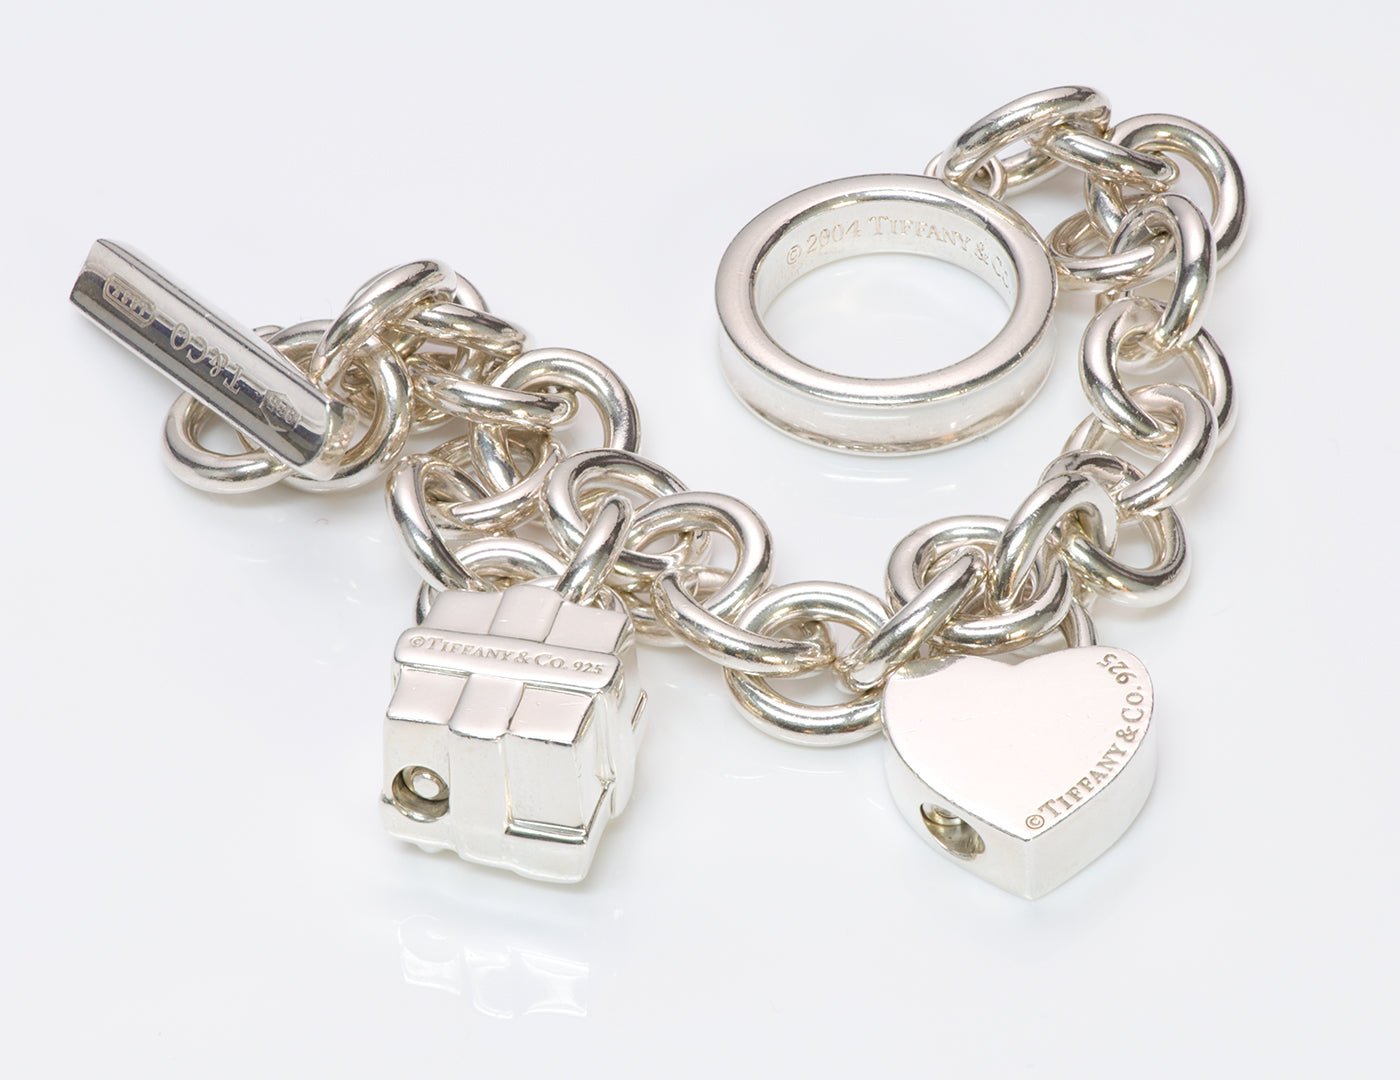 Tiffany & Co. 1837 Silver Toggle Charm Bracelet